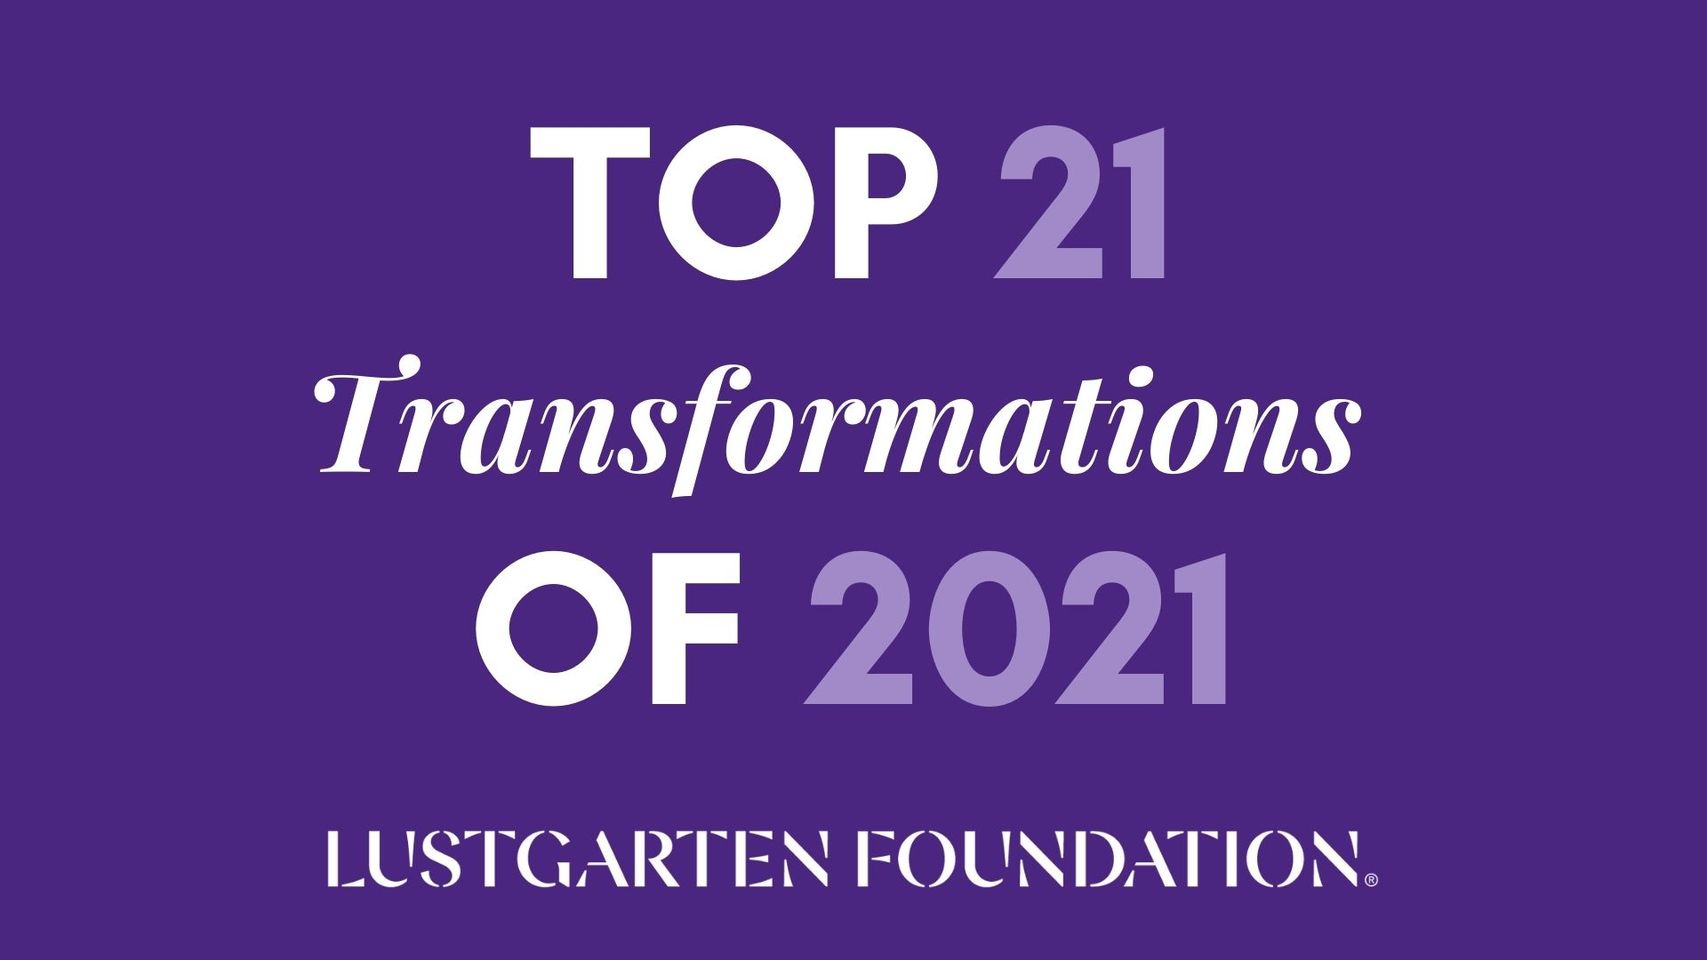 Lustgarten’s 21 Transformations of 2021